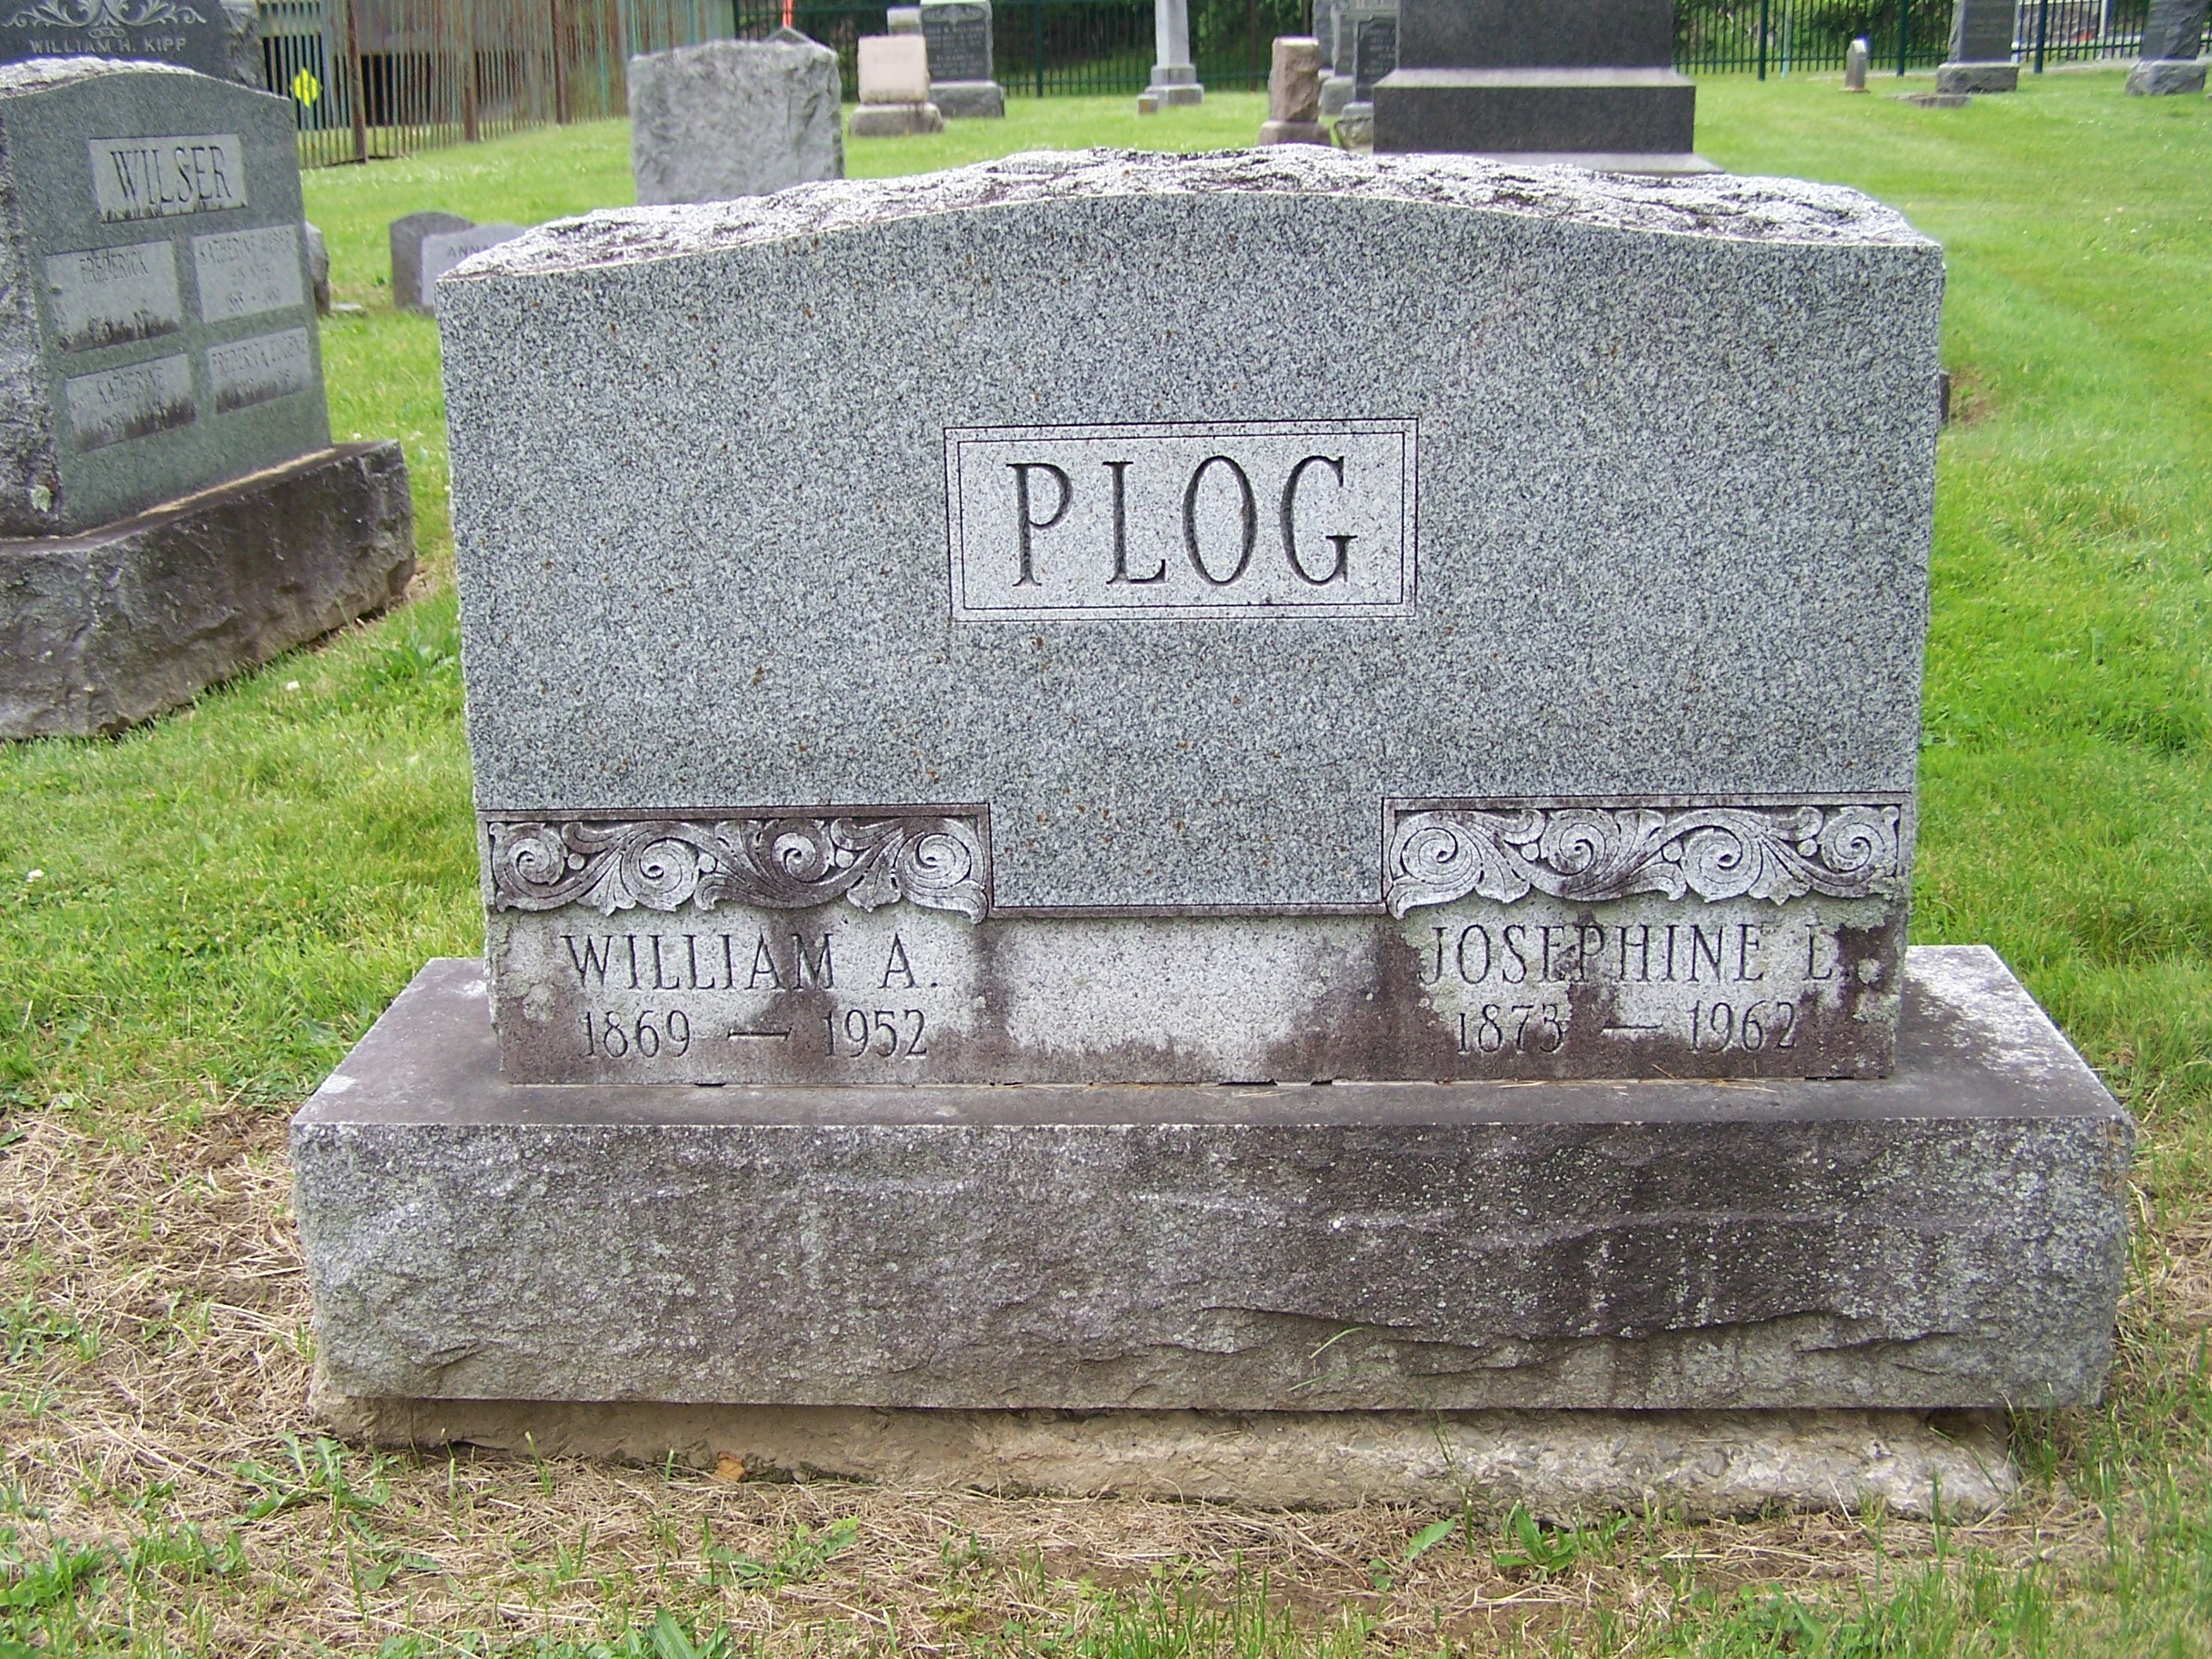 A gravestone, reading William and Josephine Plog